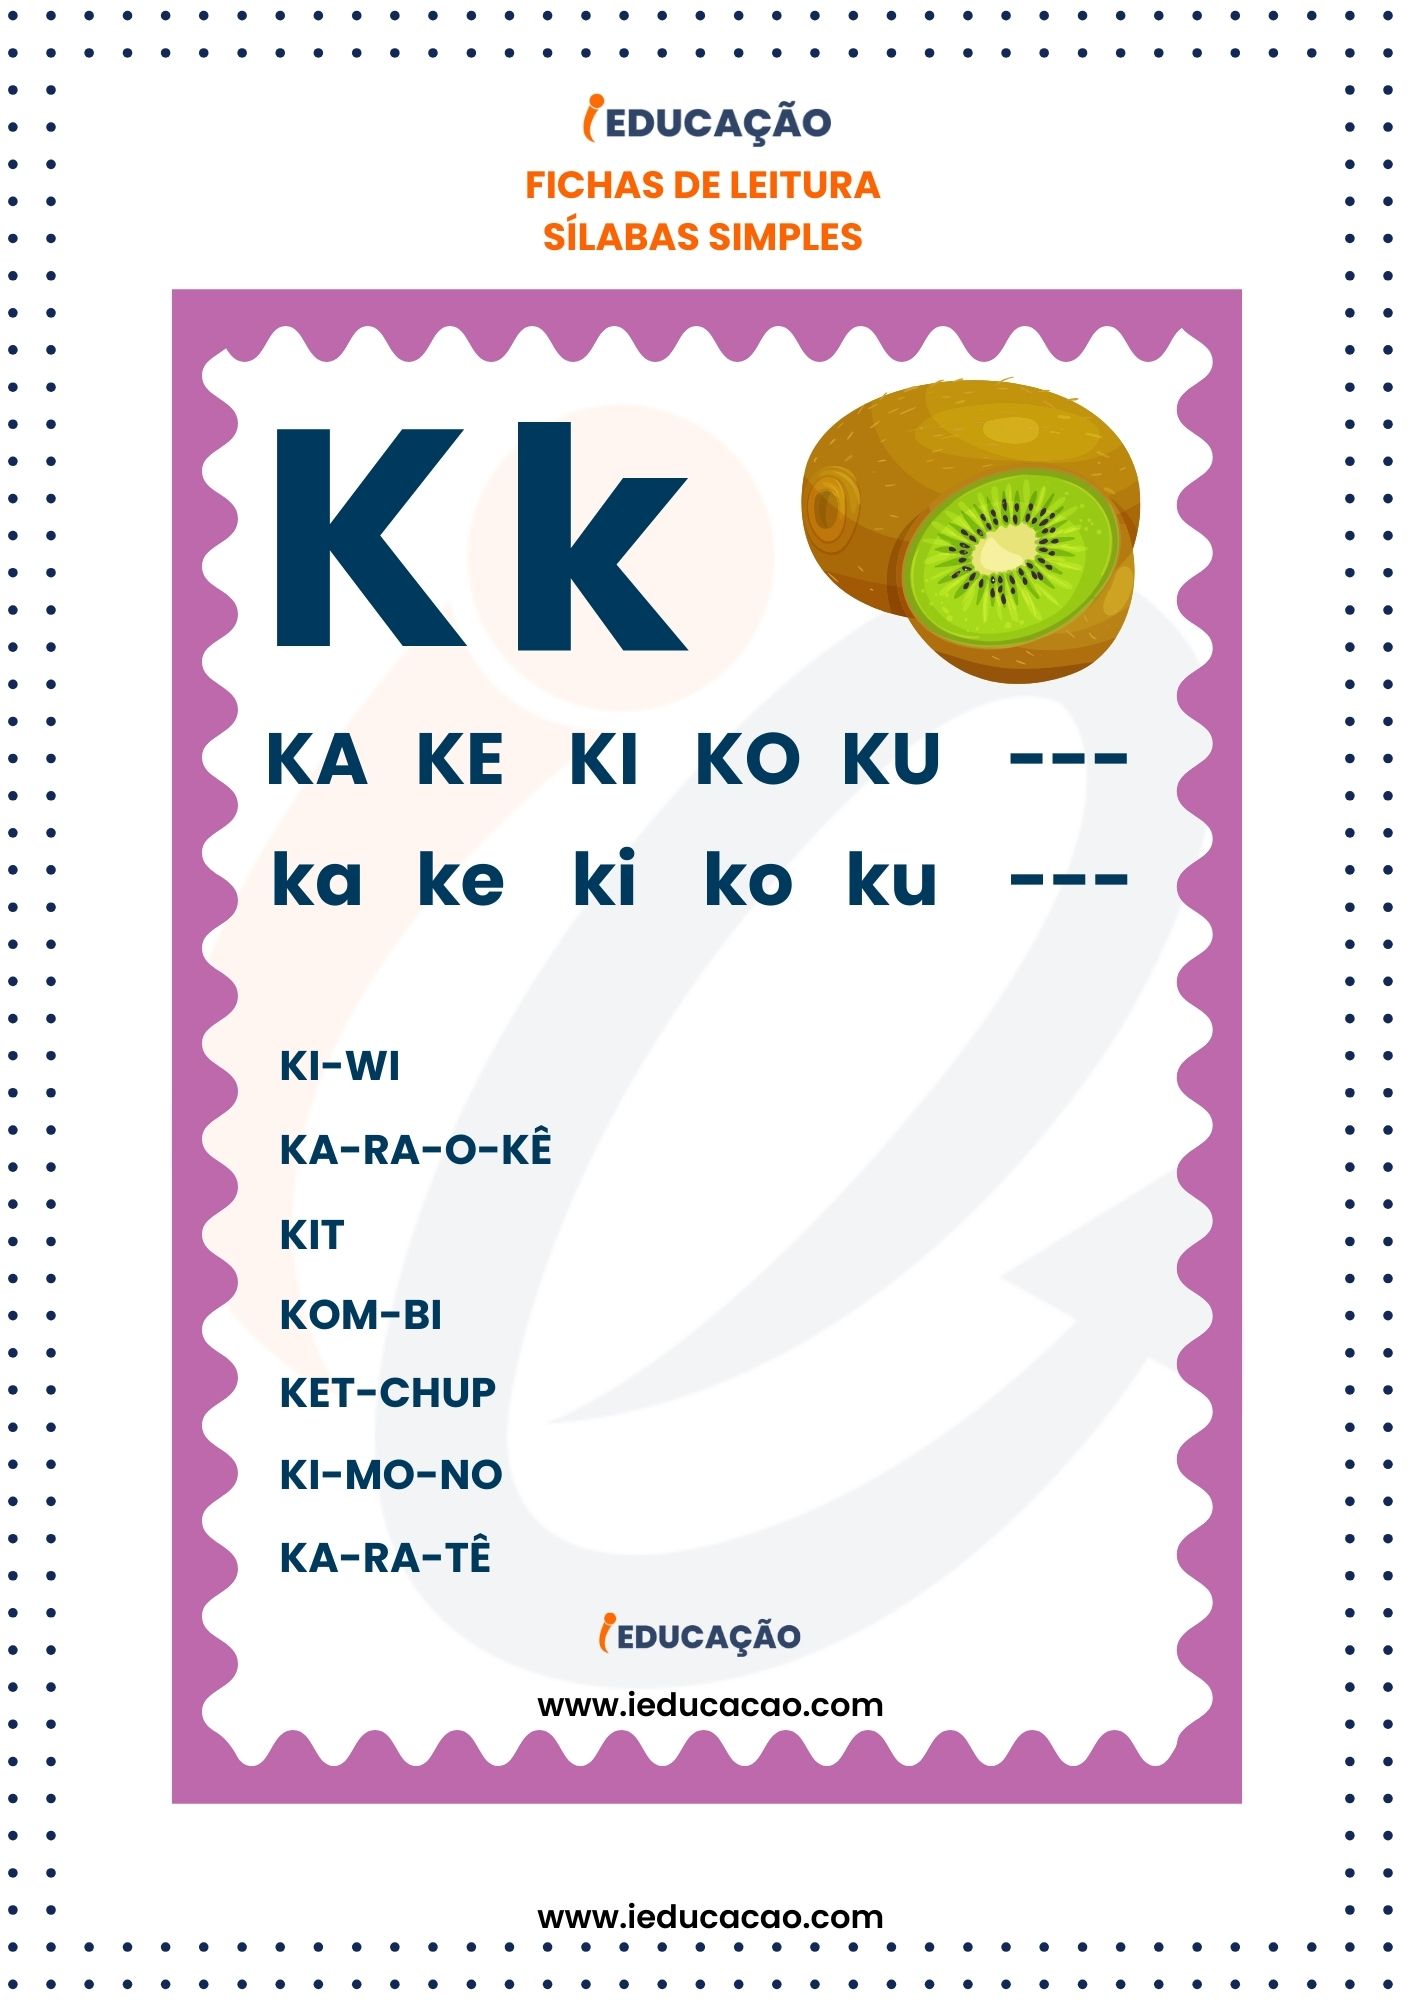 Fichas de Leitura Silabas Simples-silaba ka ke ki- ko